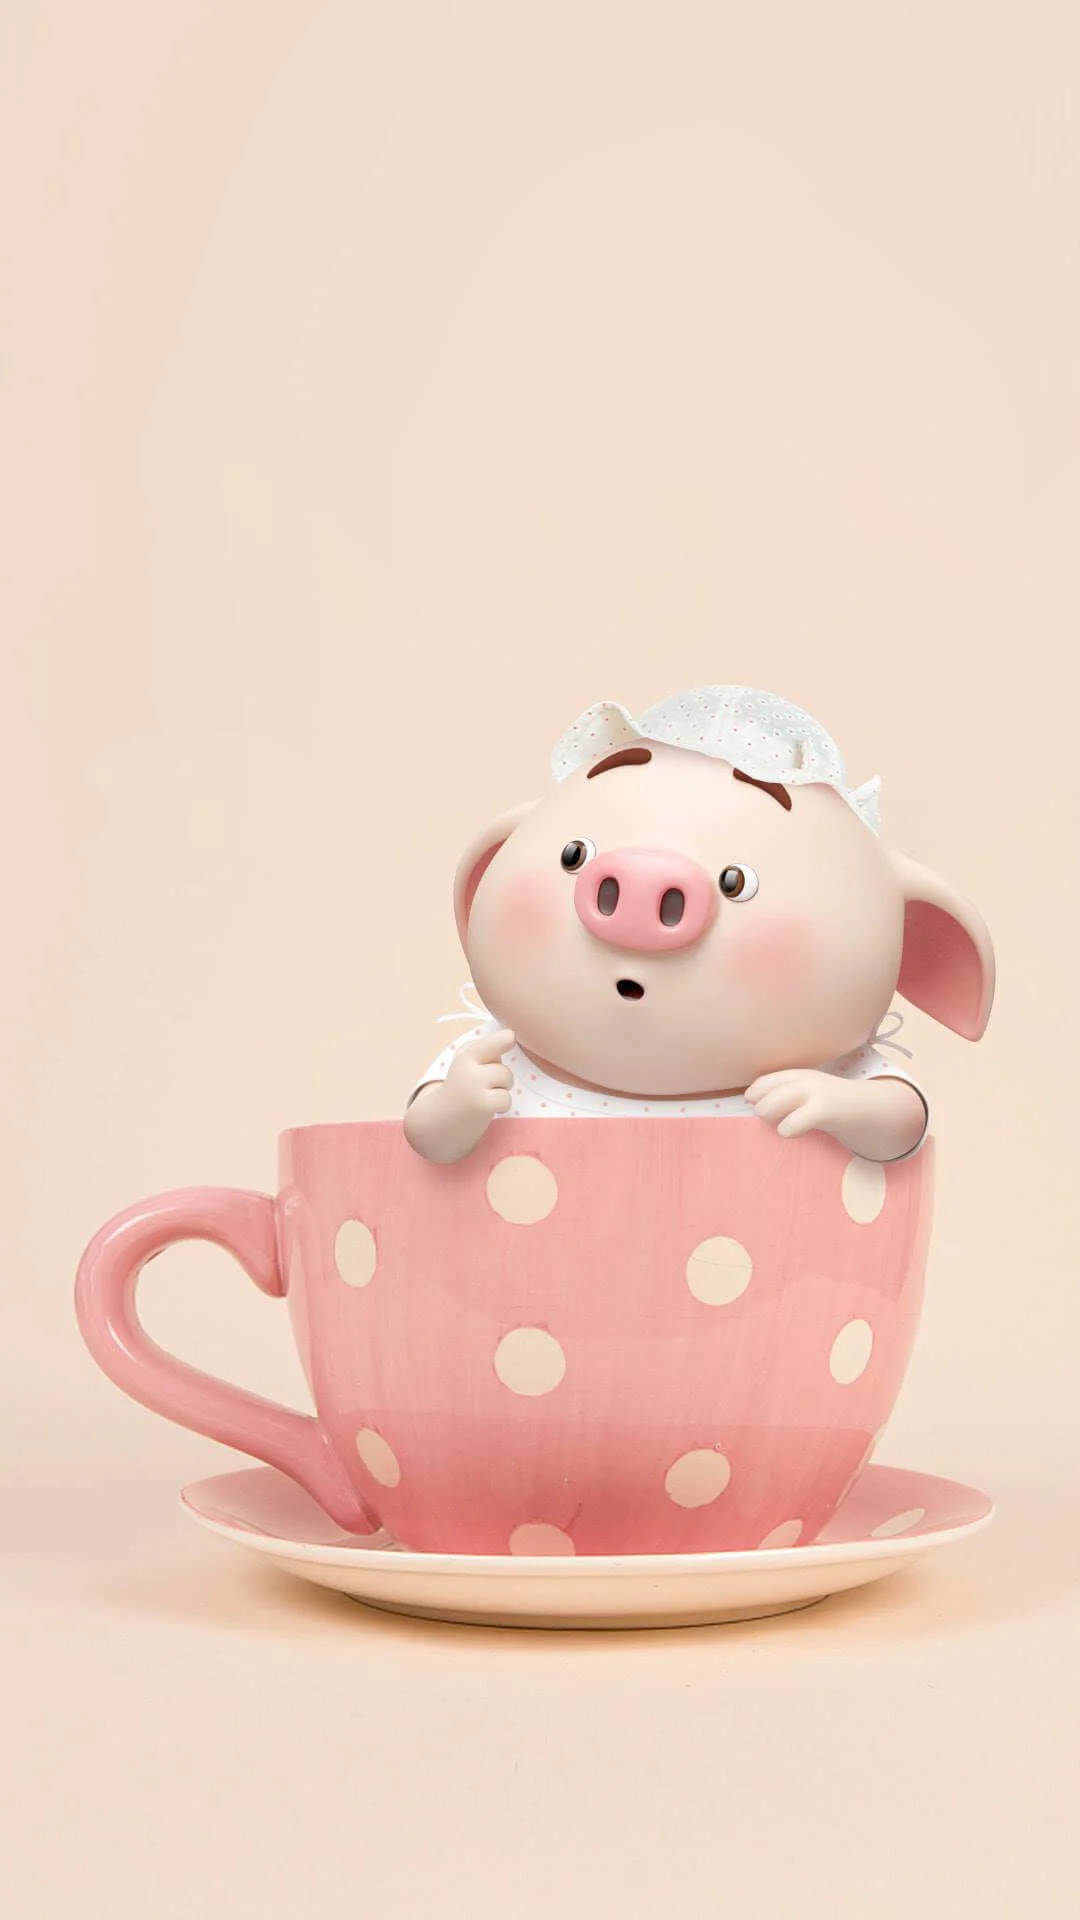 Cute Pig On A Teacup Wallpaper